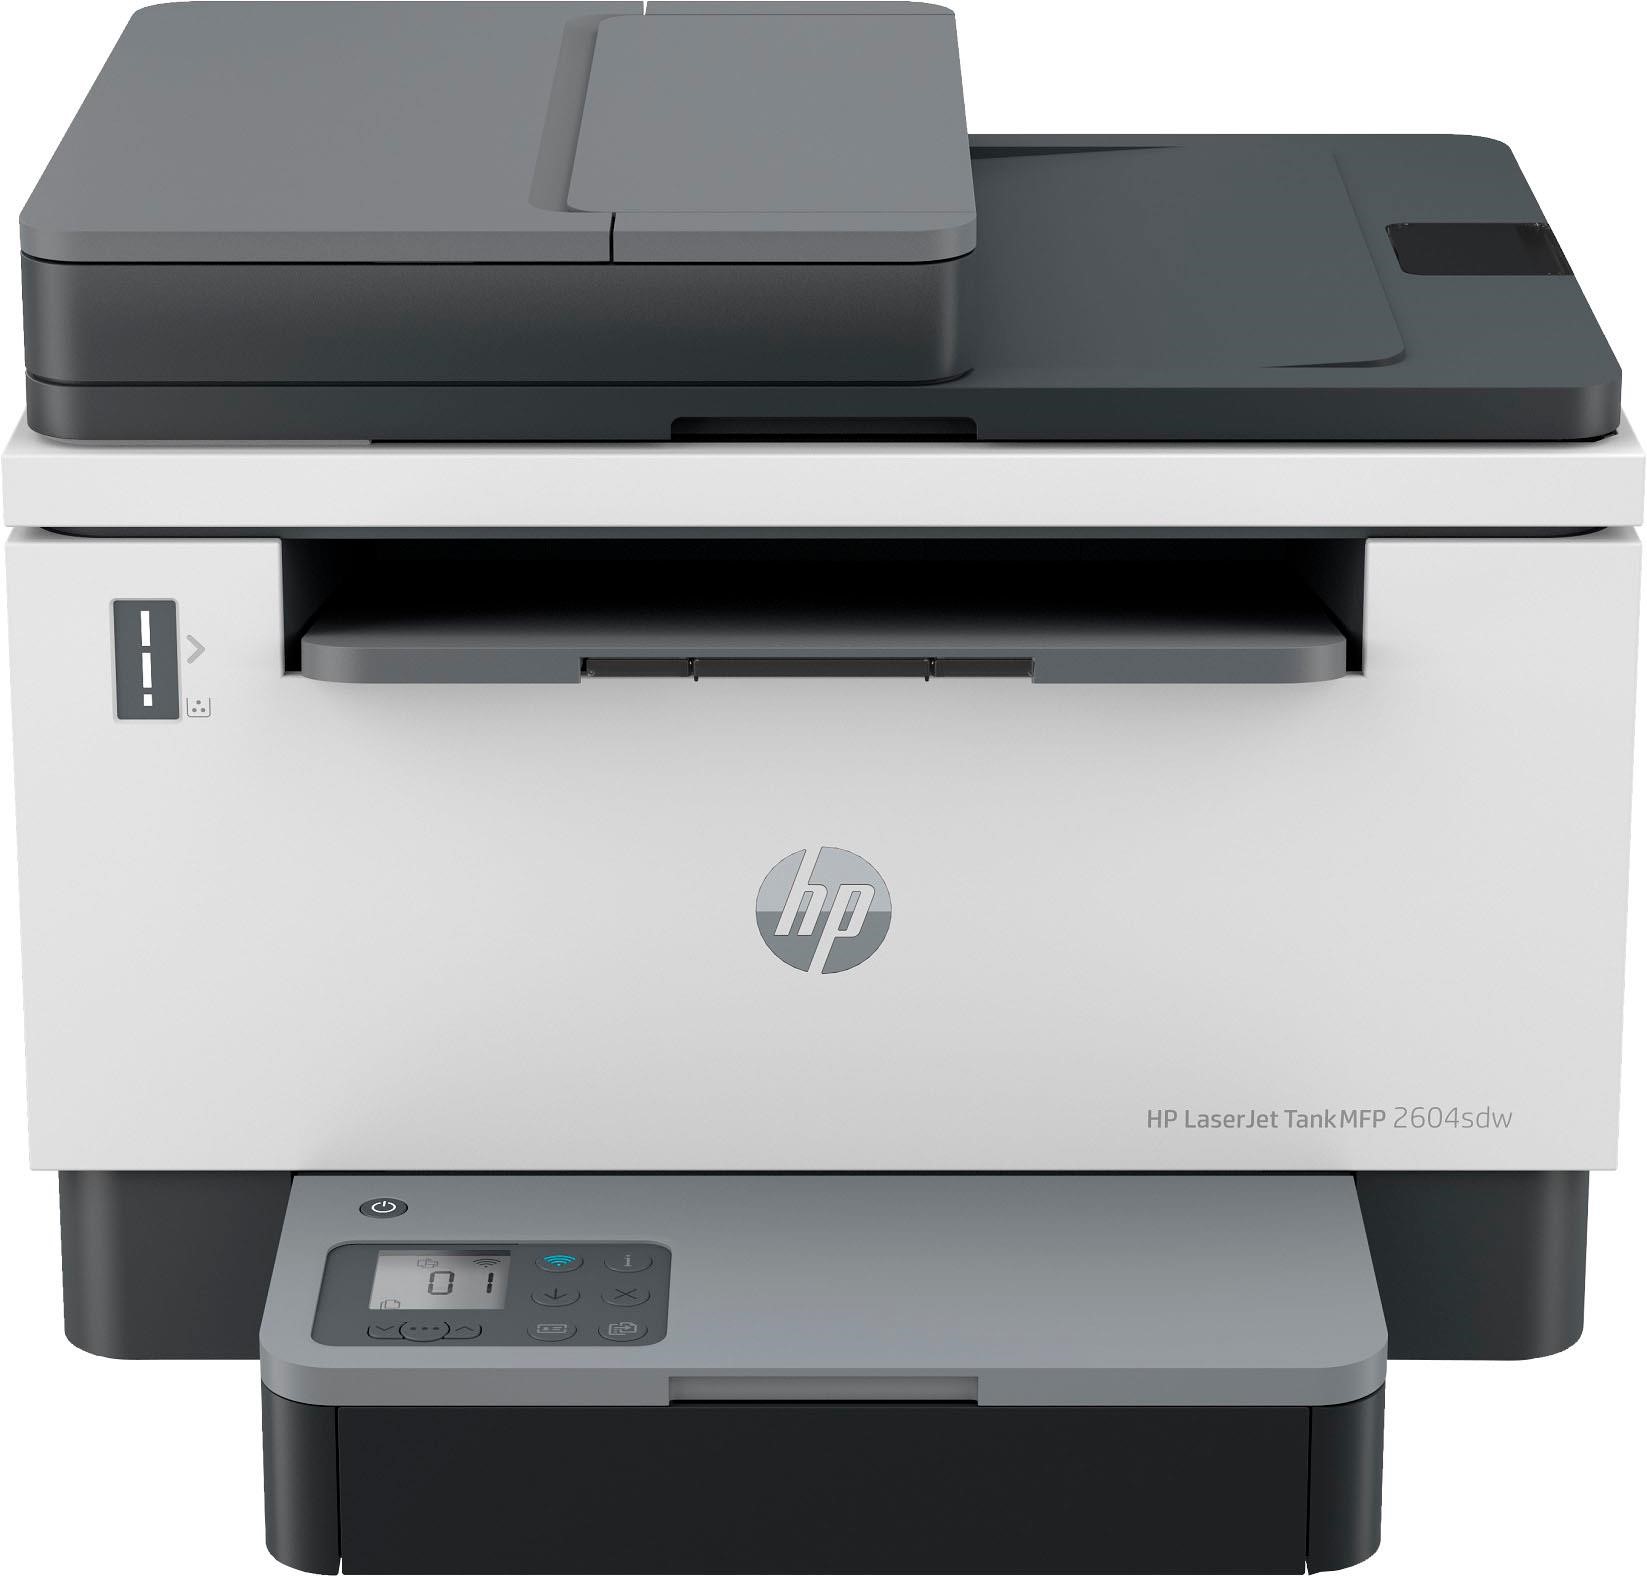 HP LaserJet 2604sdw All-In-One Printer - White